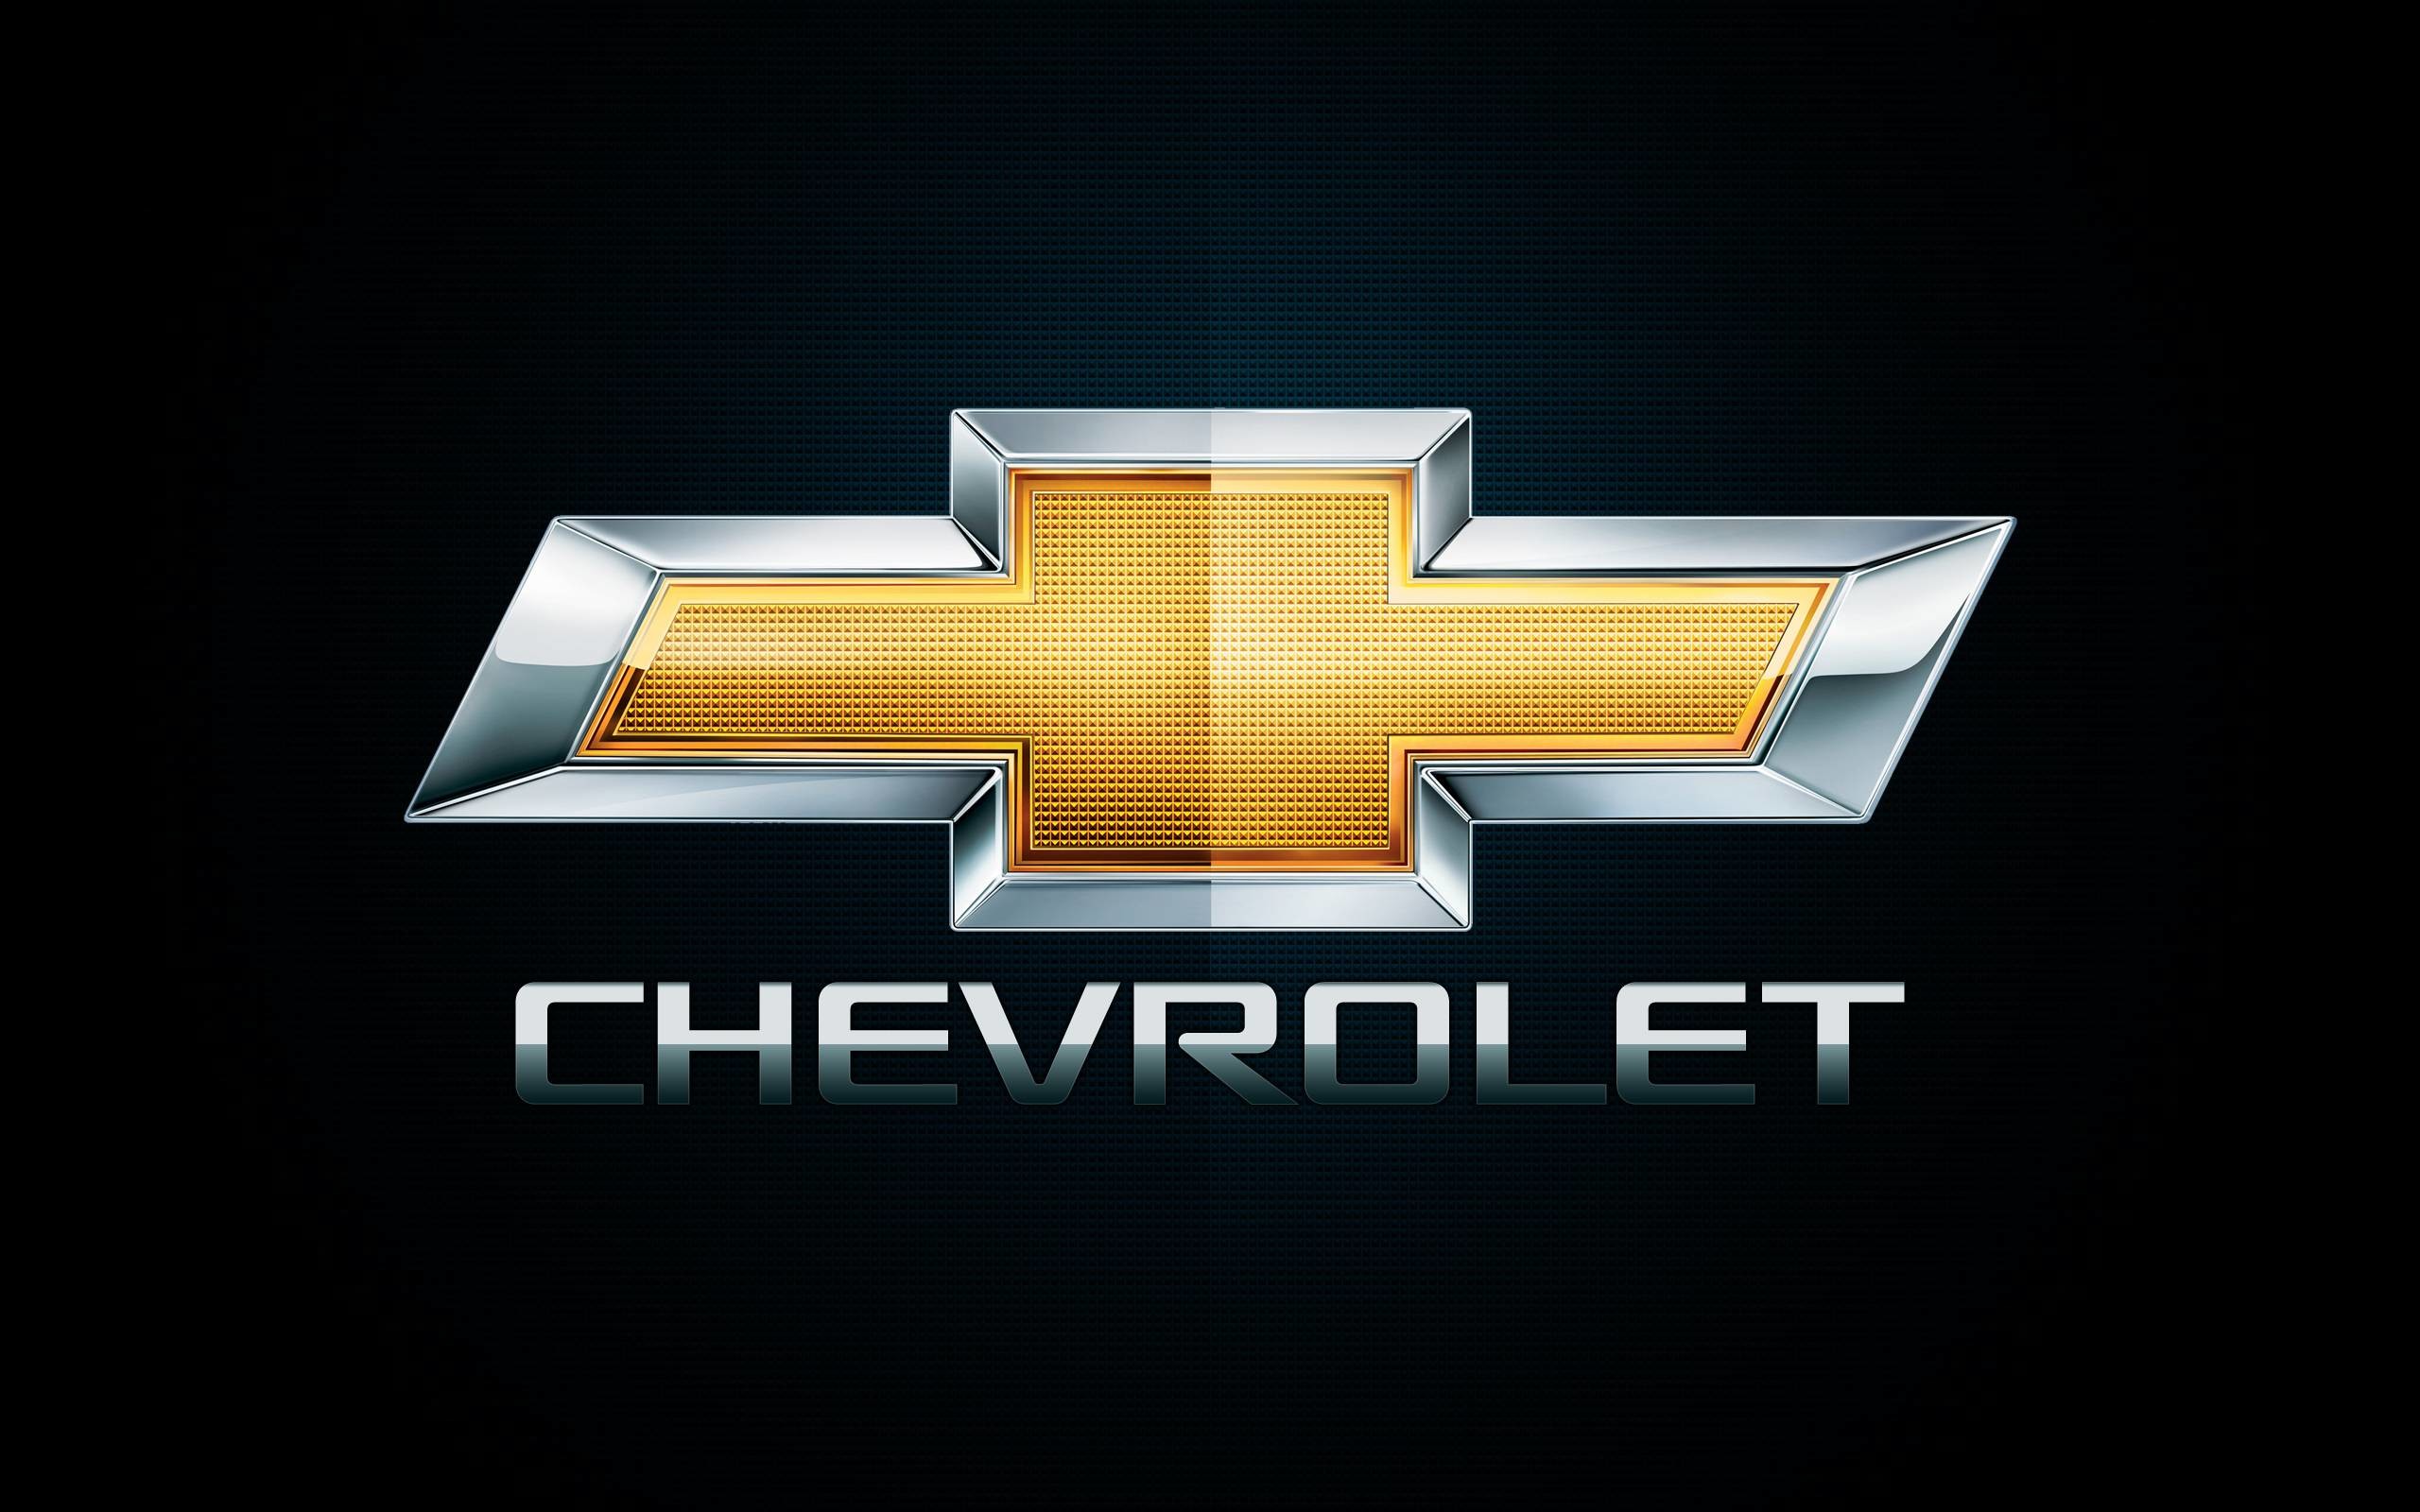 2560x1600 Chevrolet Logo Wallpapers - Full HD wallpaper search